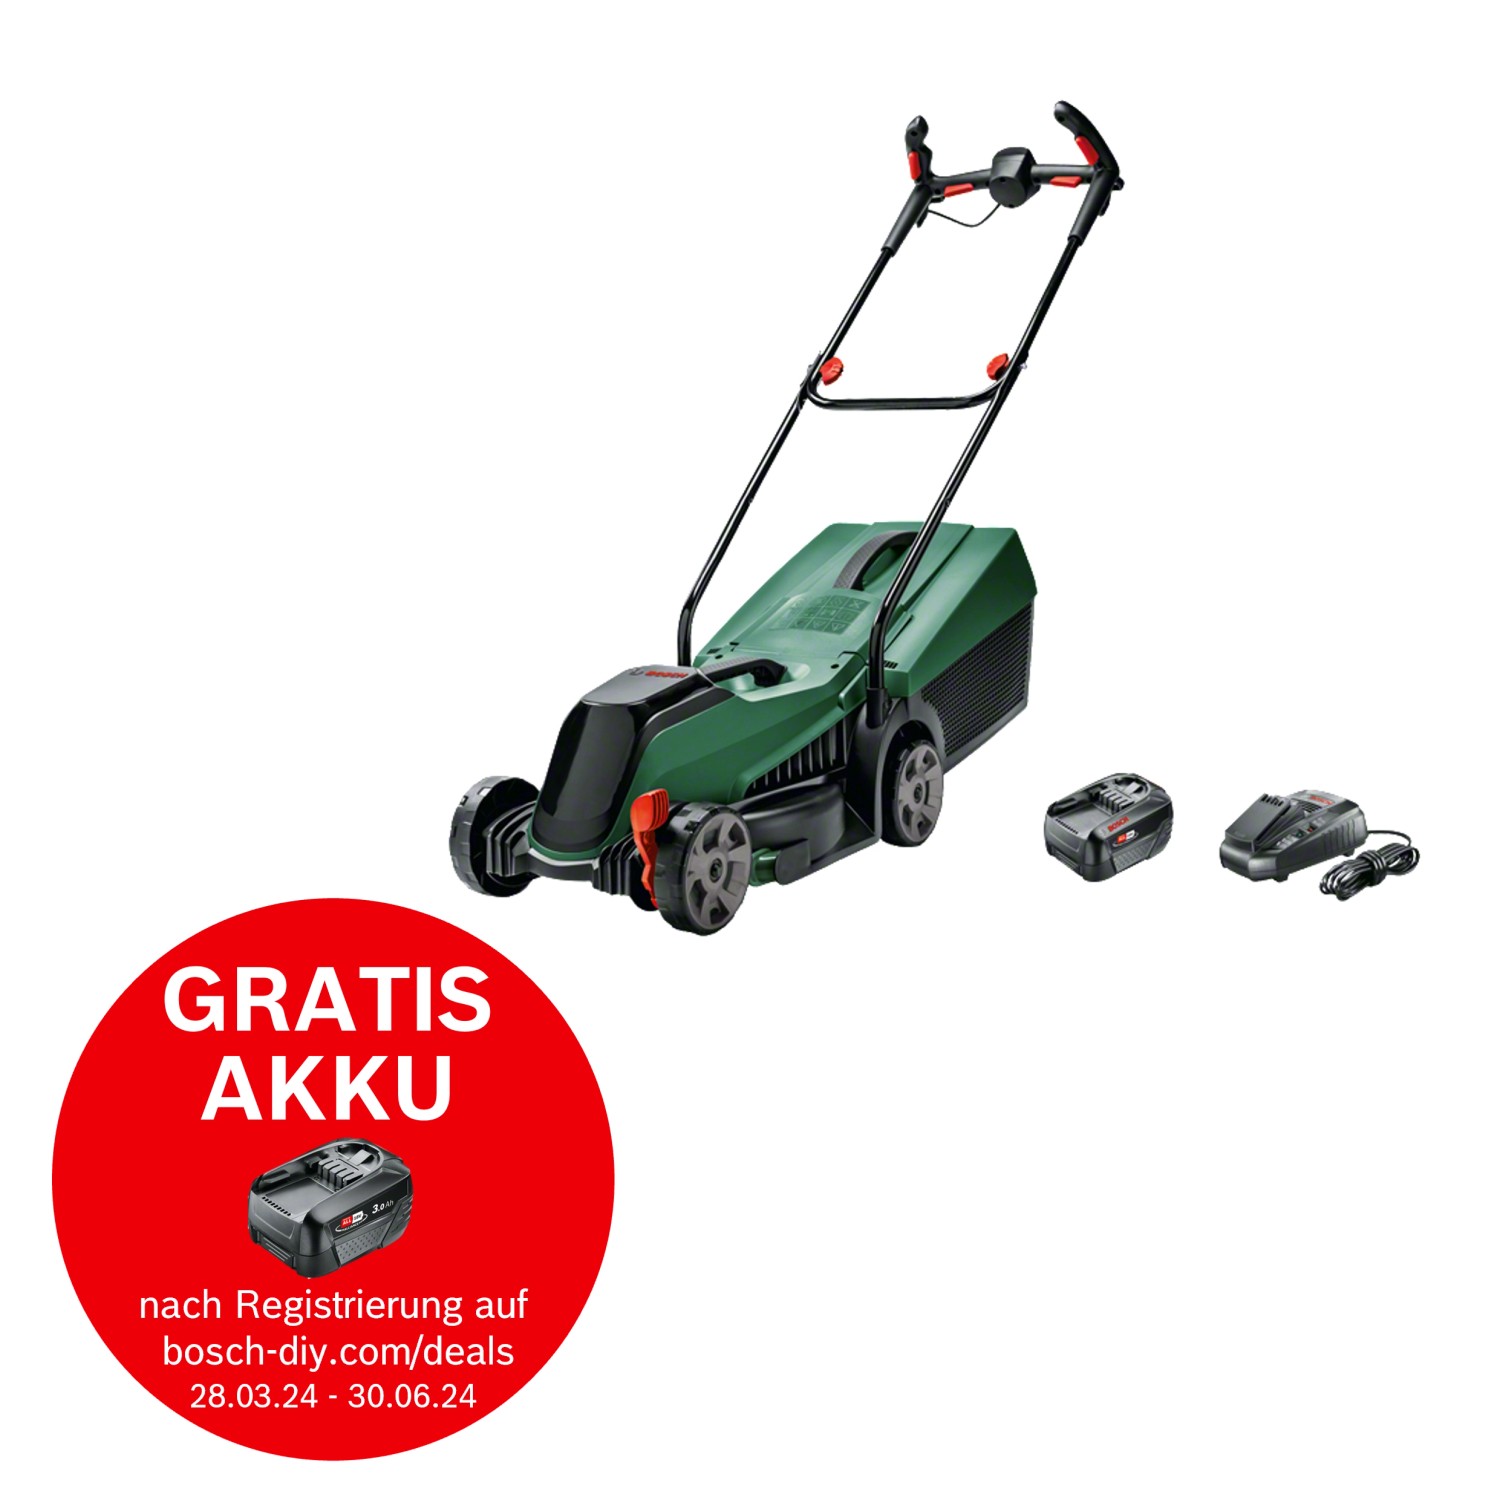 Bosch Akku-Rasenmäher CityMower 18V-32 inkl. Akku und Ladegerät günstig online kaufen